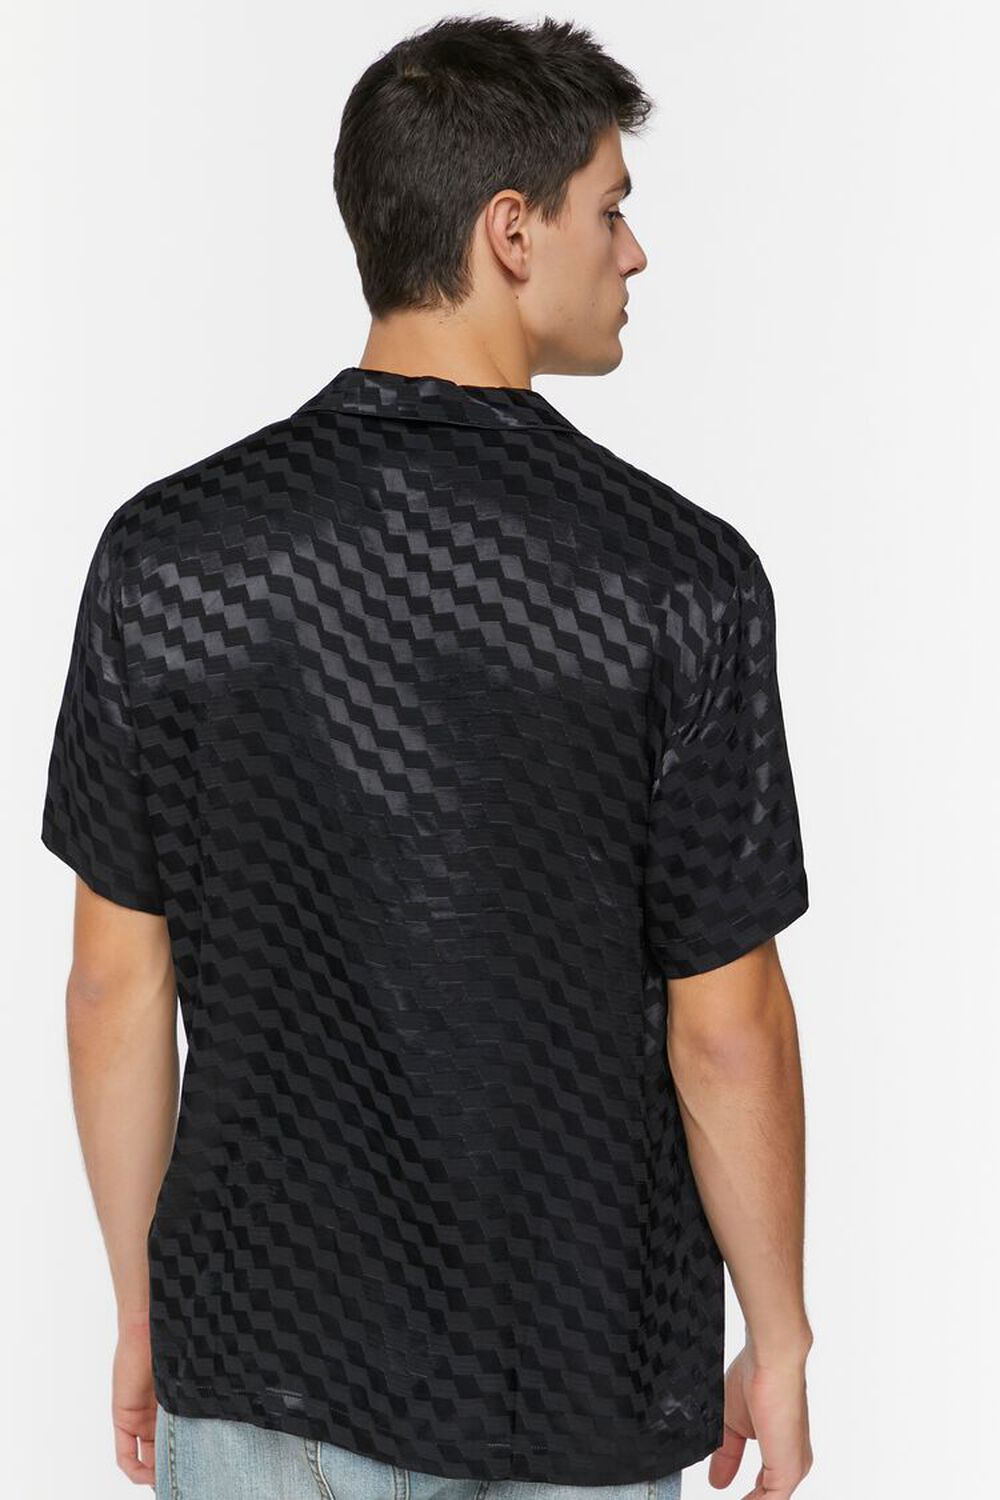 BLACK Satin Checkered Shirt, image 3